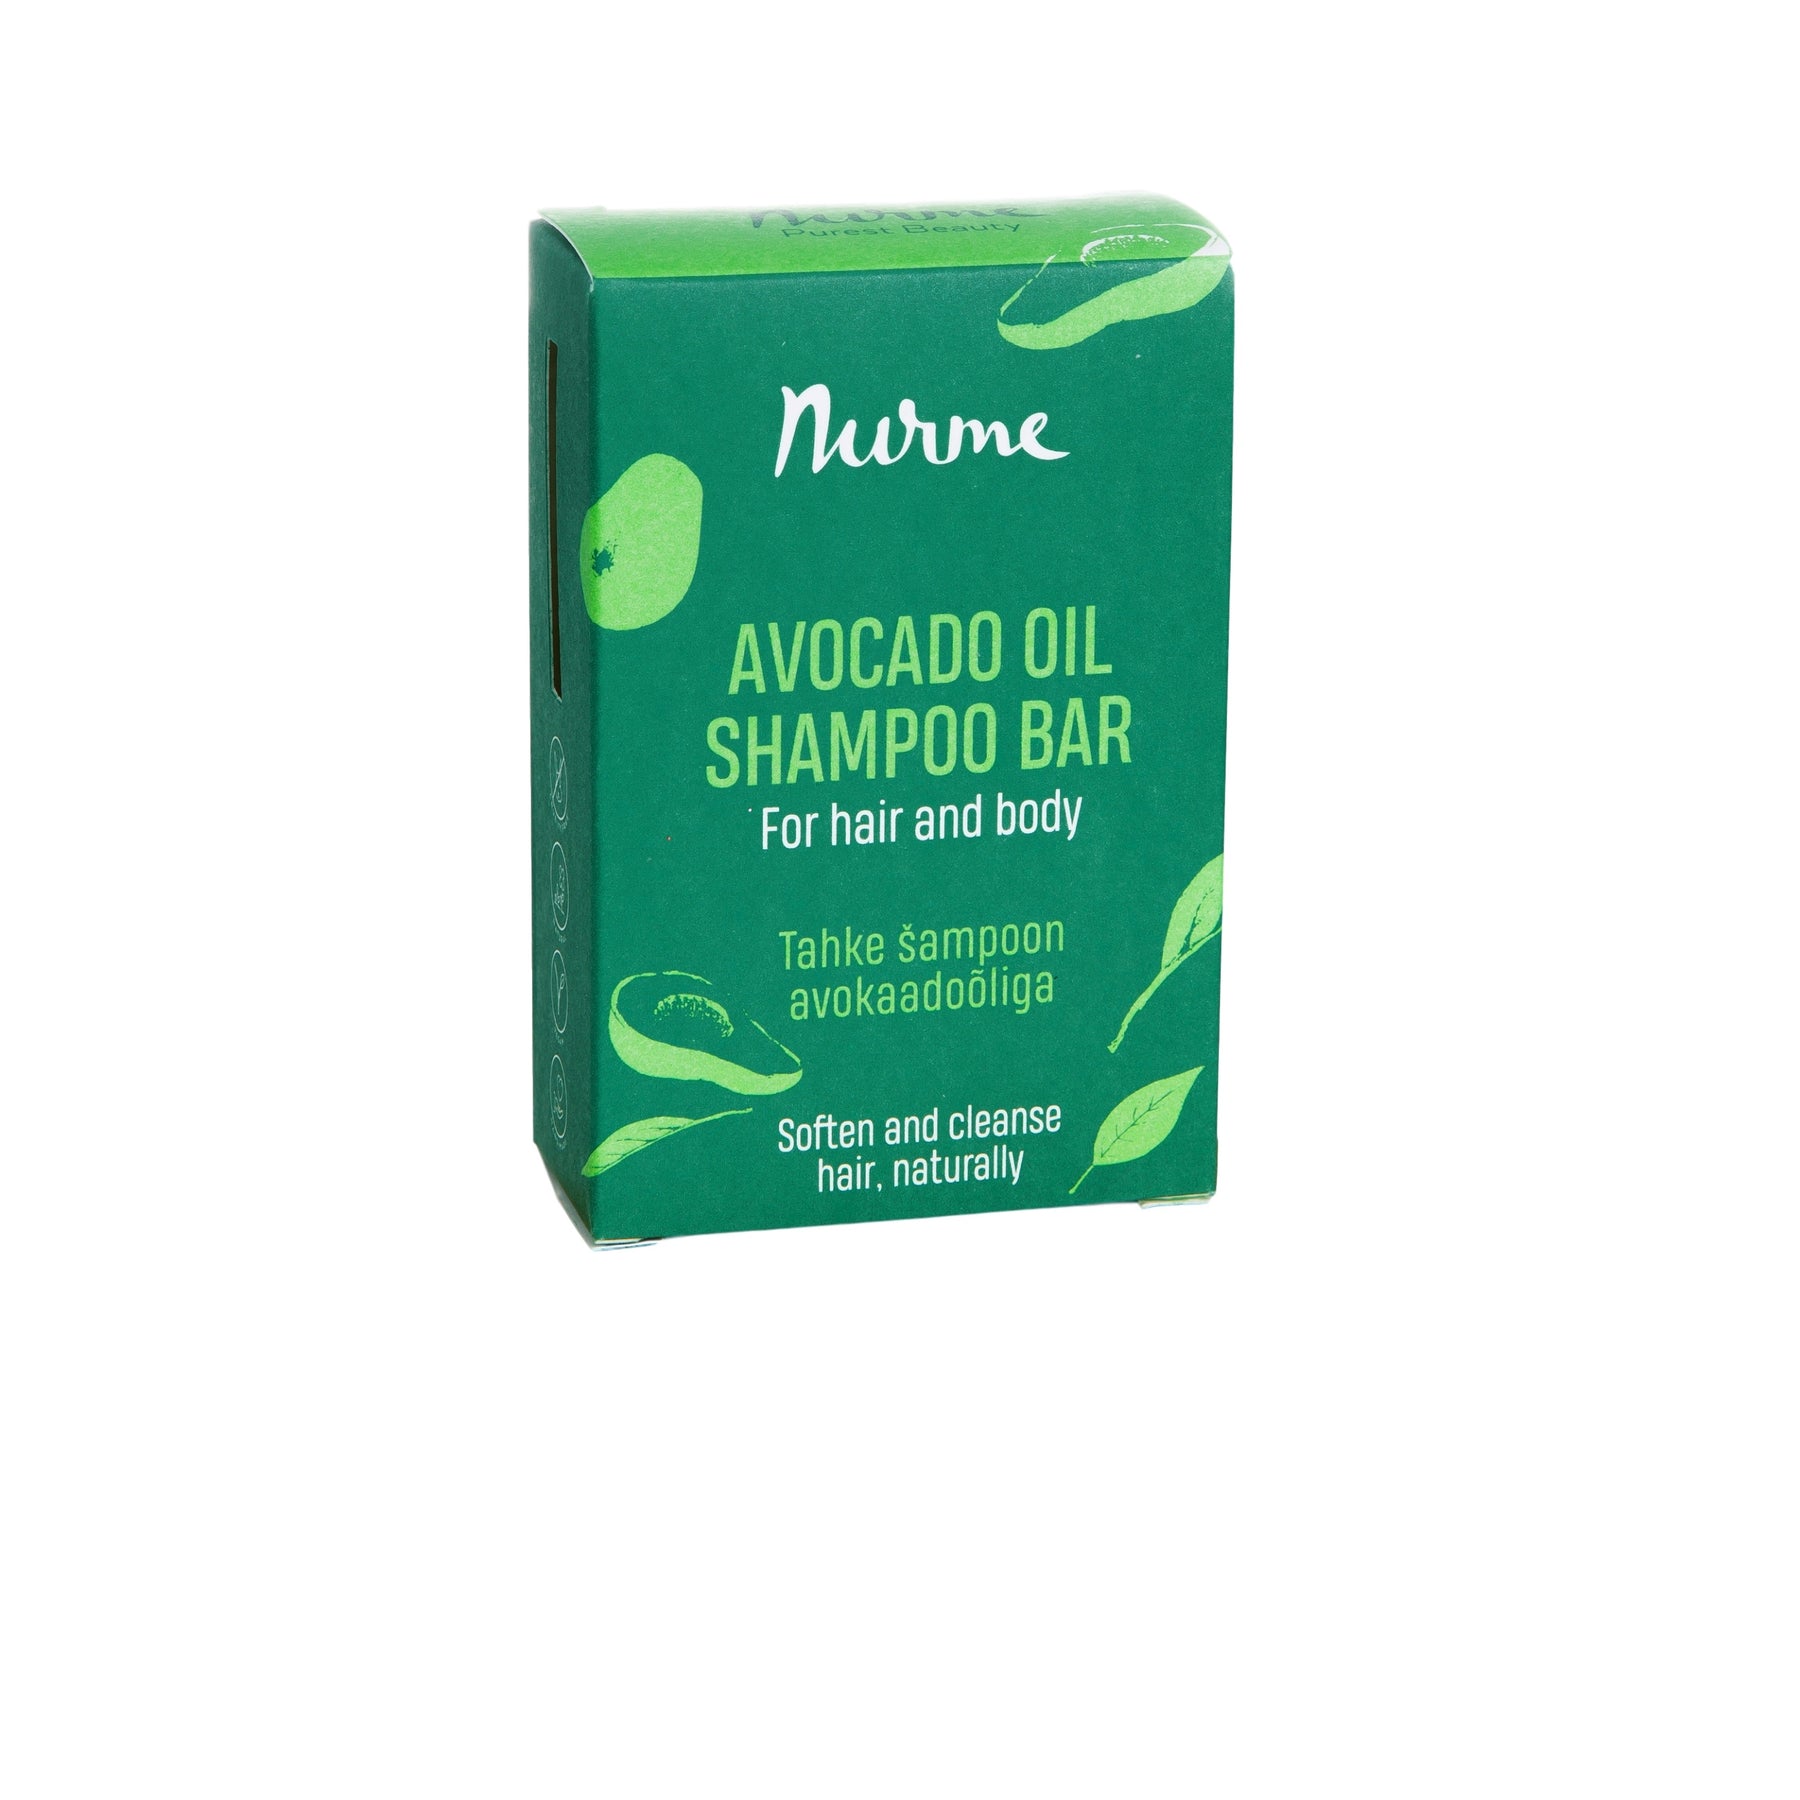 Nurme Avocado Oil Shampoo Bar - Avokadoöljy Palashampoo 100 g